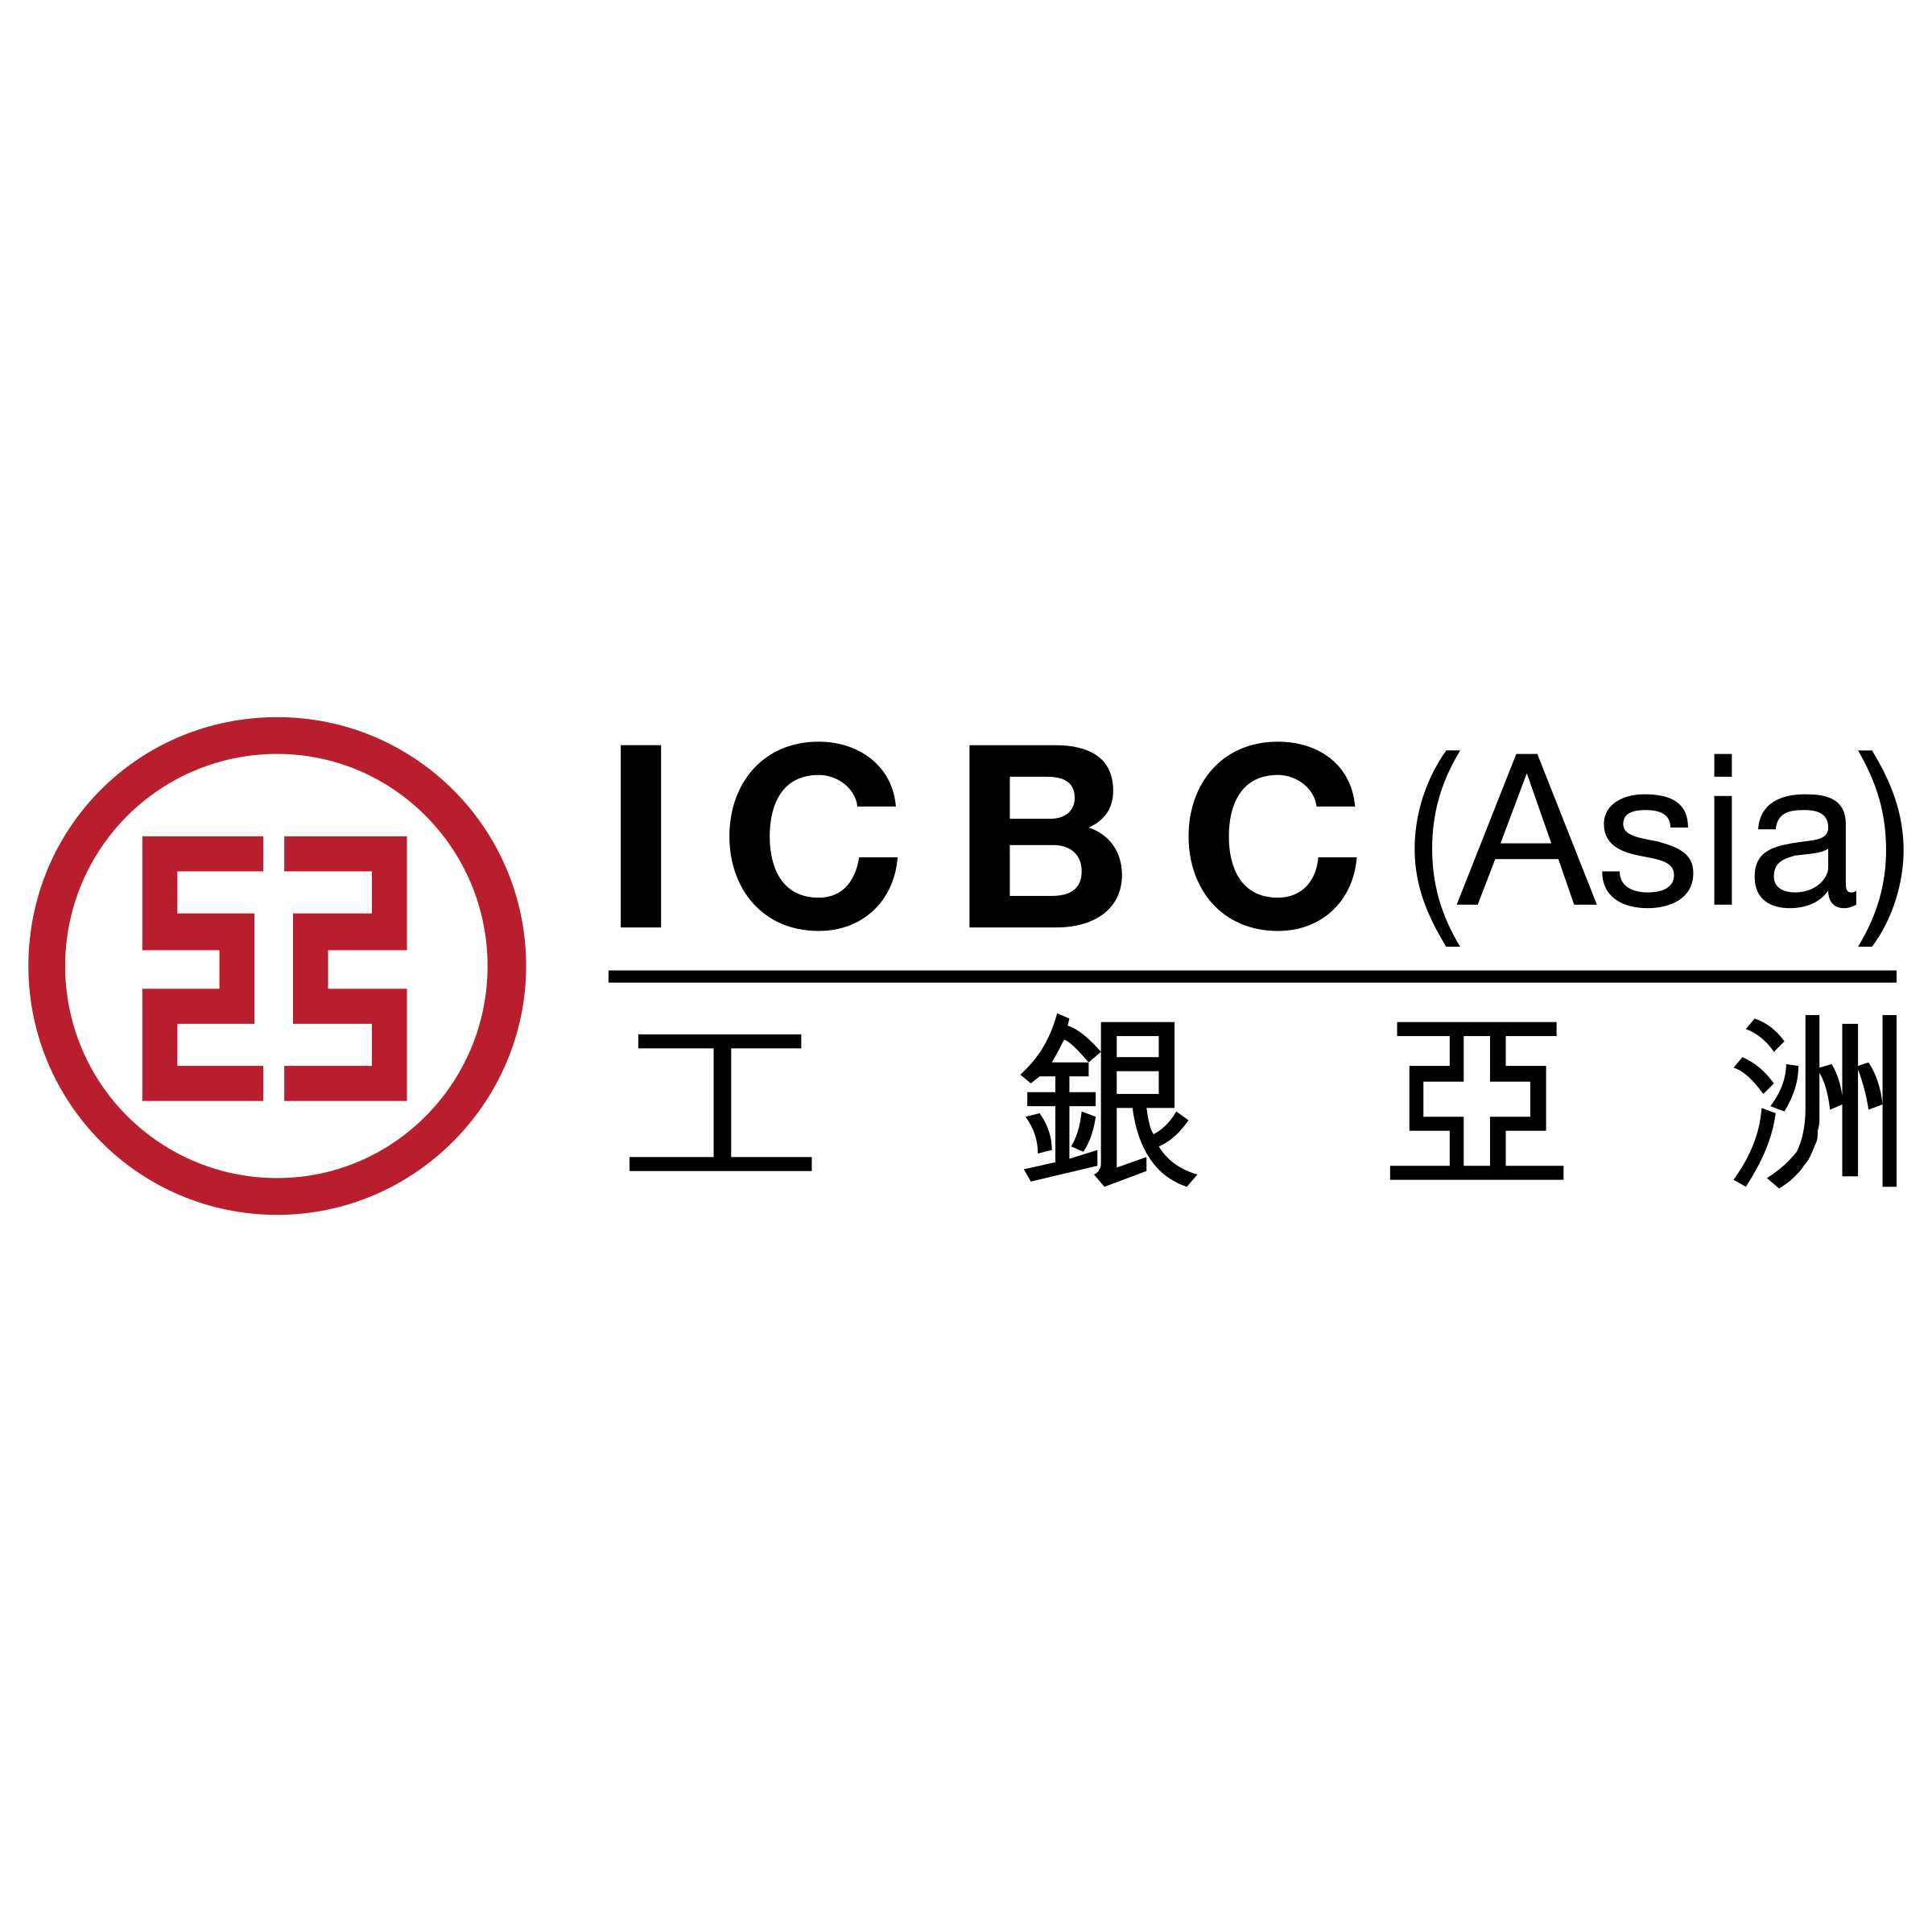 ICBC Logo Transparent File